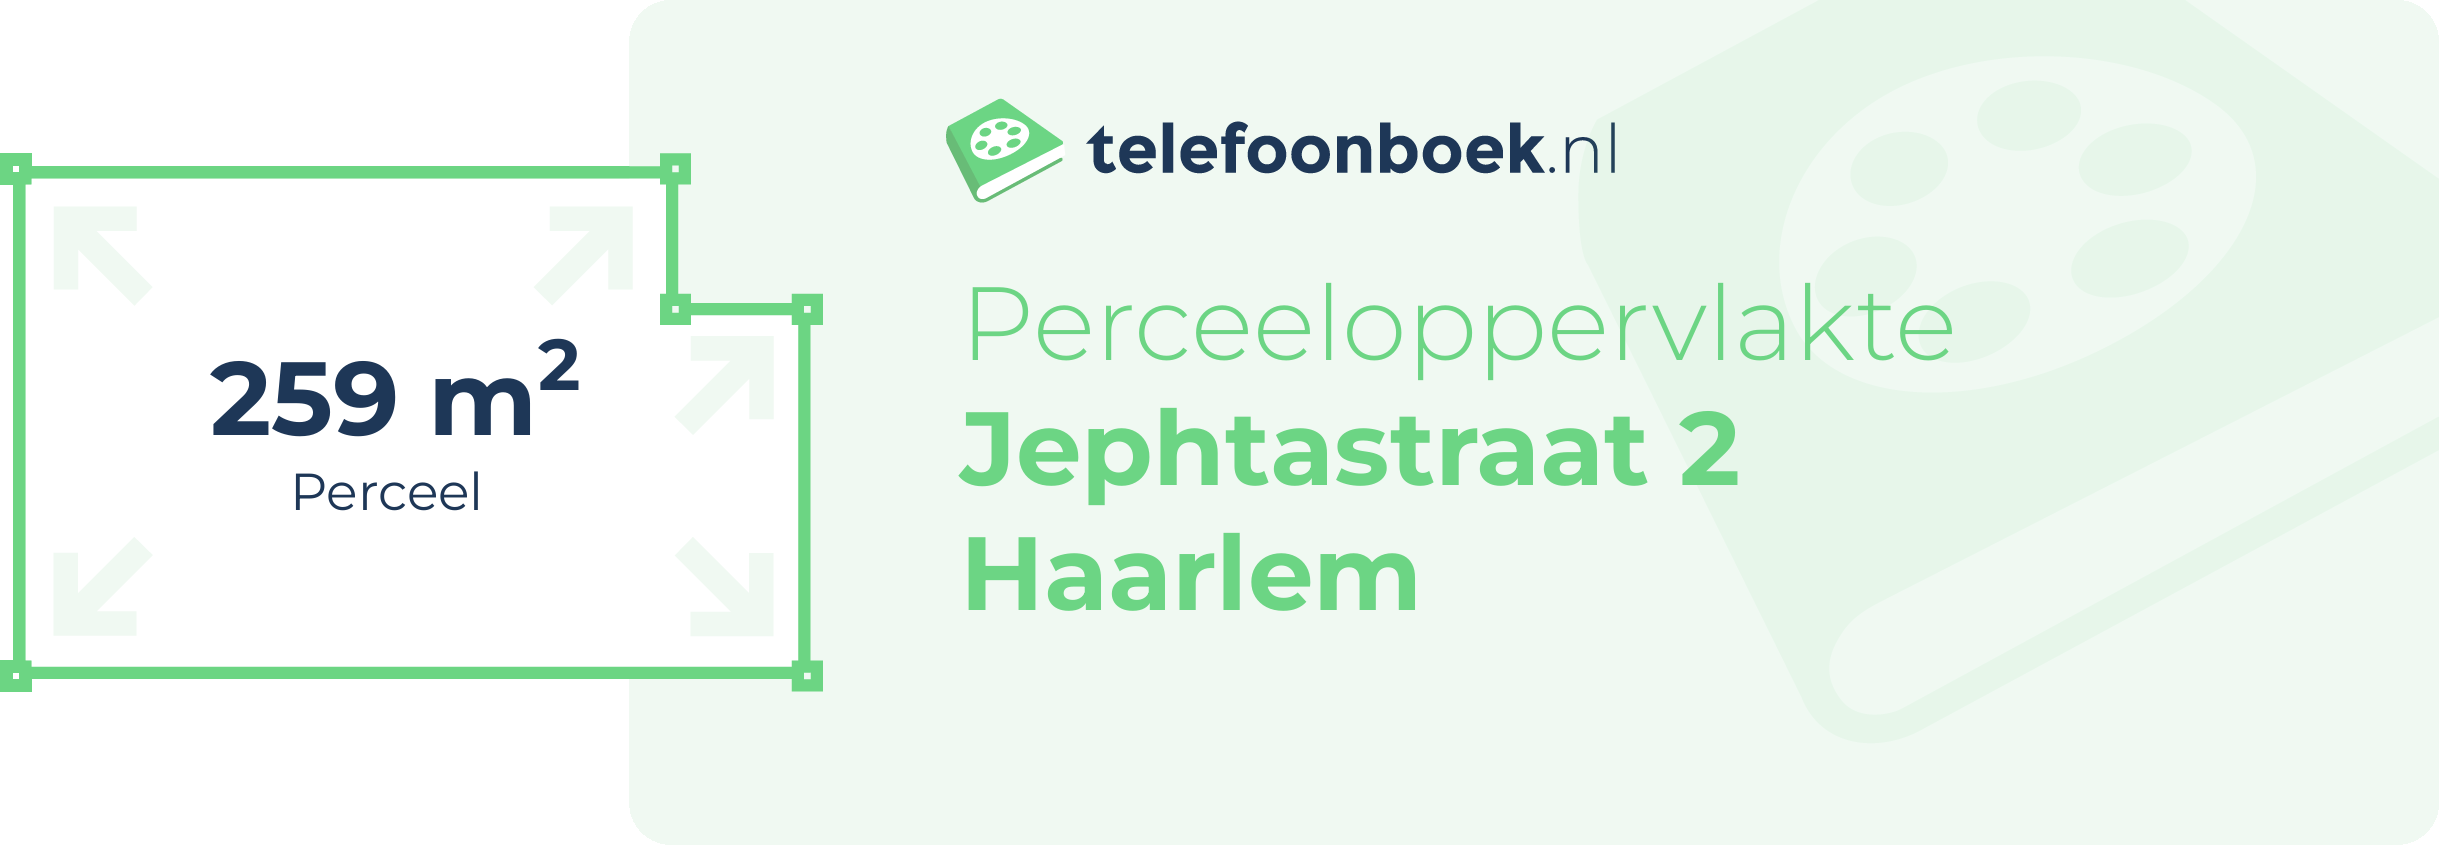 Perceeloppervlakte Jephtastraat 2 Haarlem